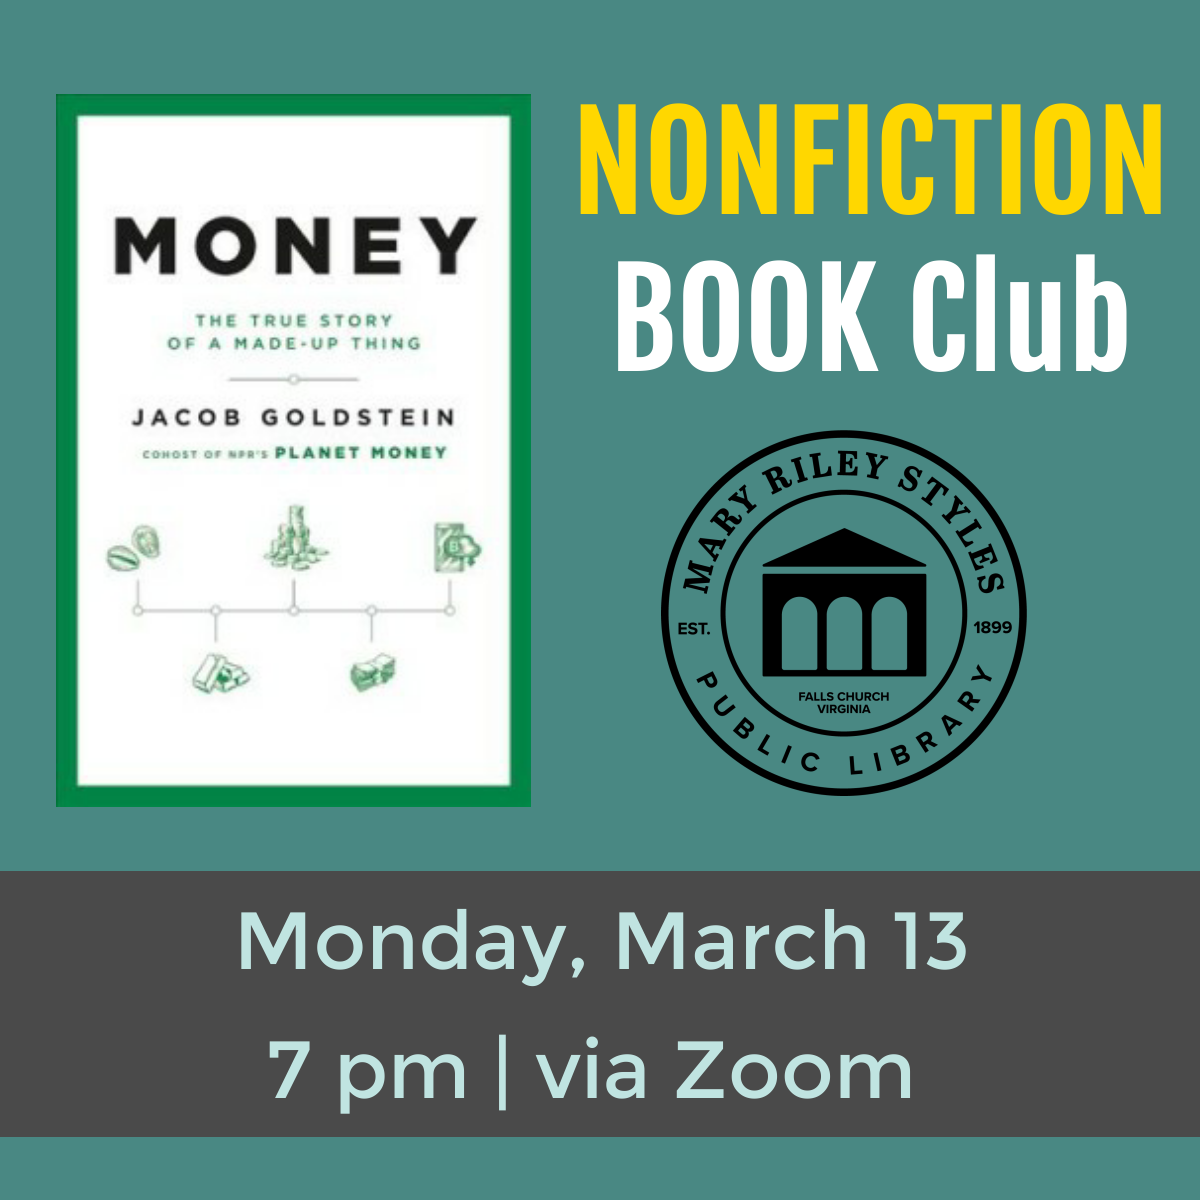 Nonfiction Book Club Monday March 13 at 7 pm via Zoom Money